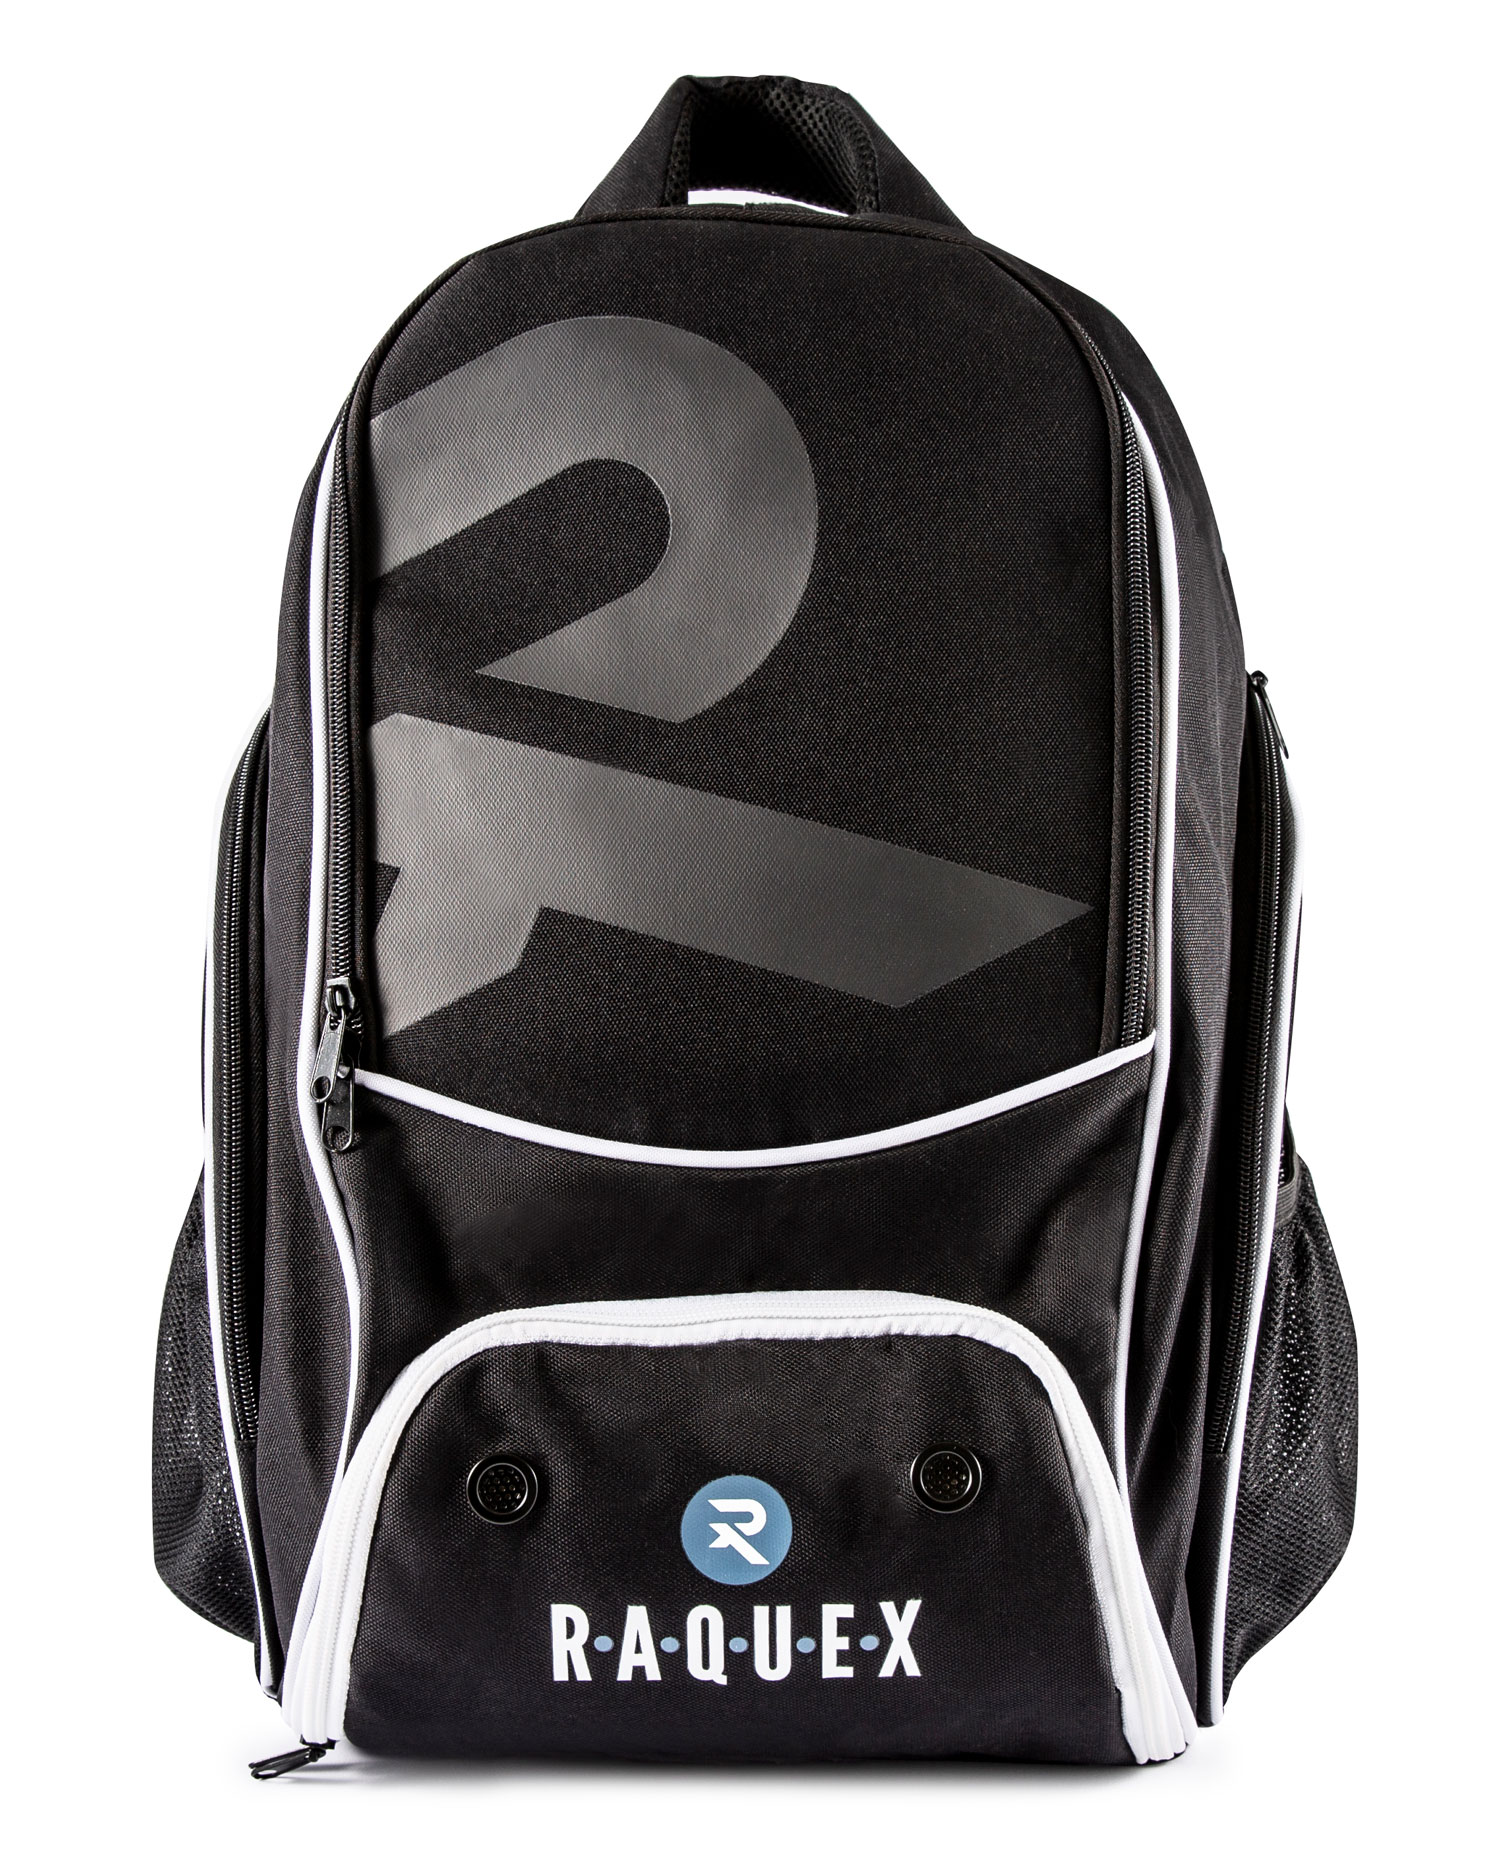 Raquex racquet backpack ruck sack